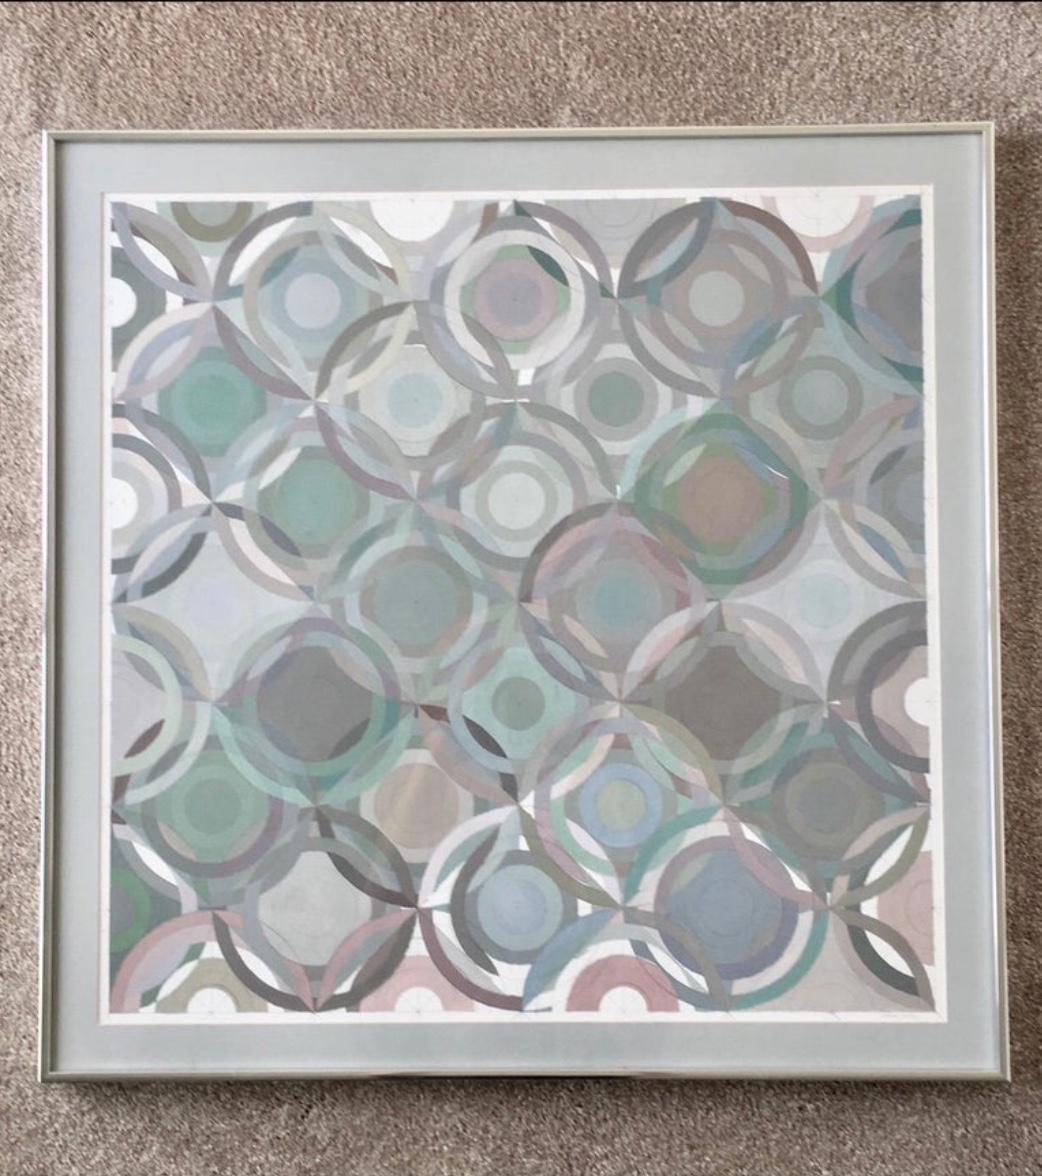 Modern Framed Abstract Geometric Gouache on Paper by Stevan Kissel For Sale